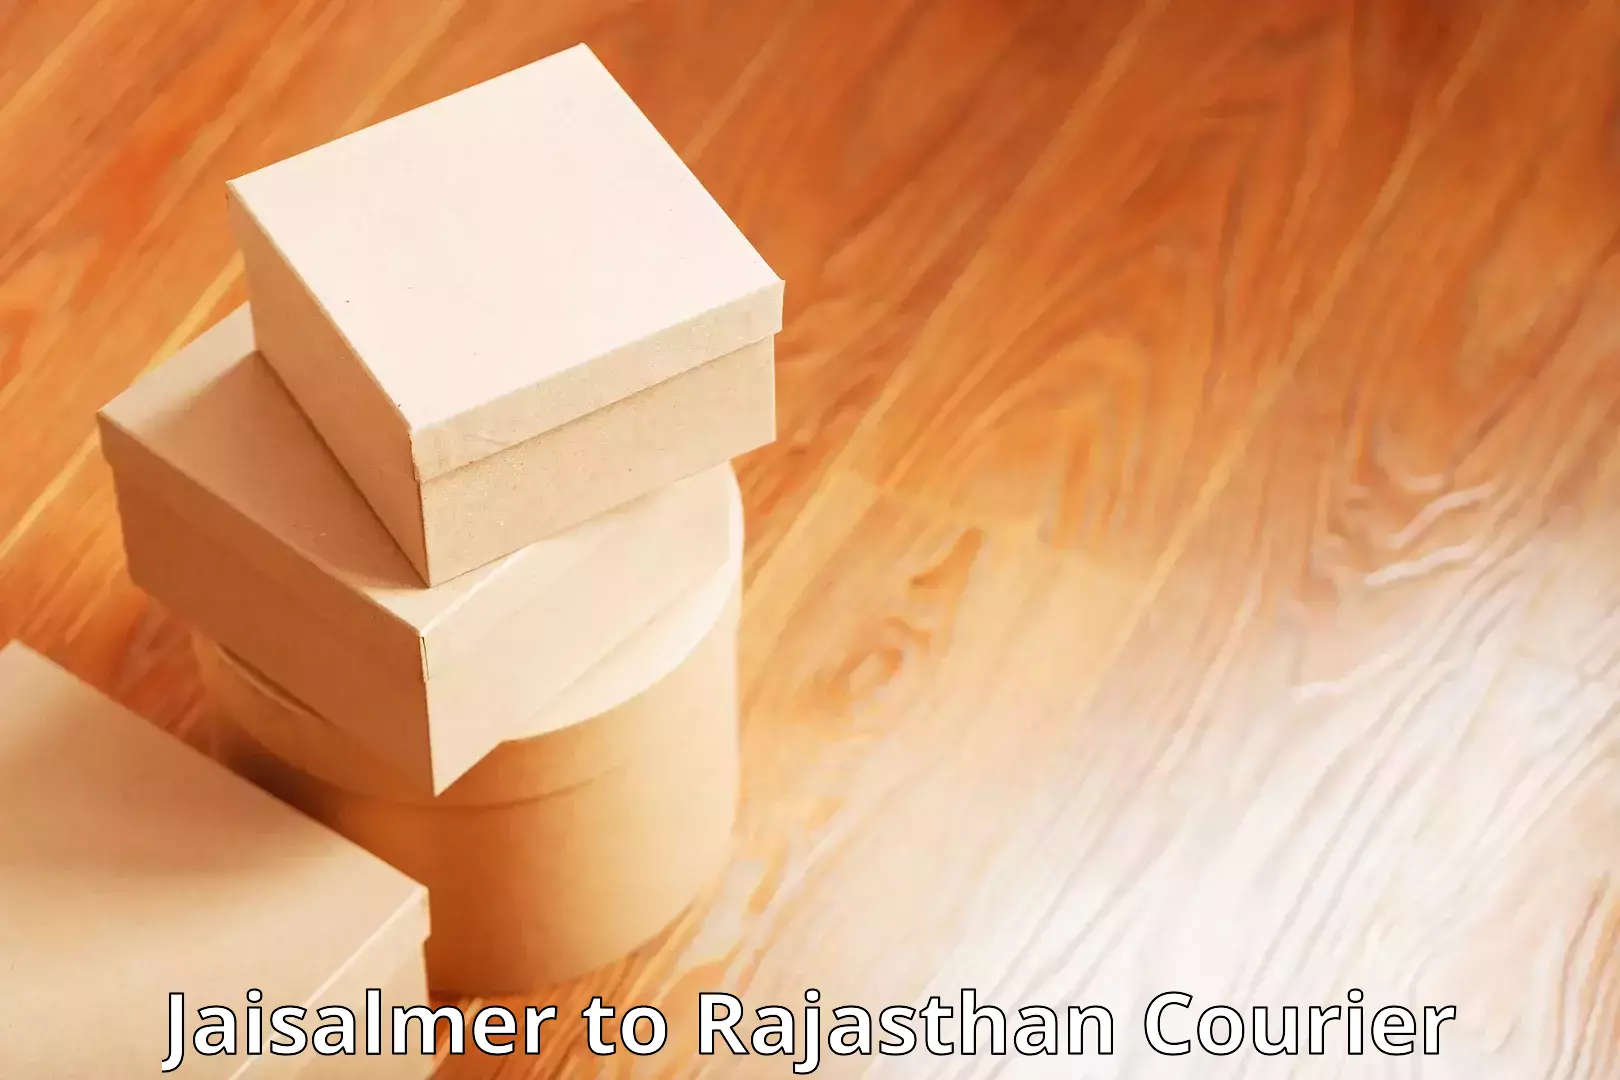 Digital courier platforms Jaisalmer to Rajasthan